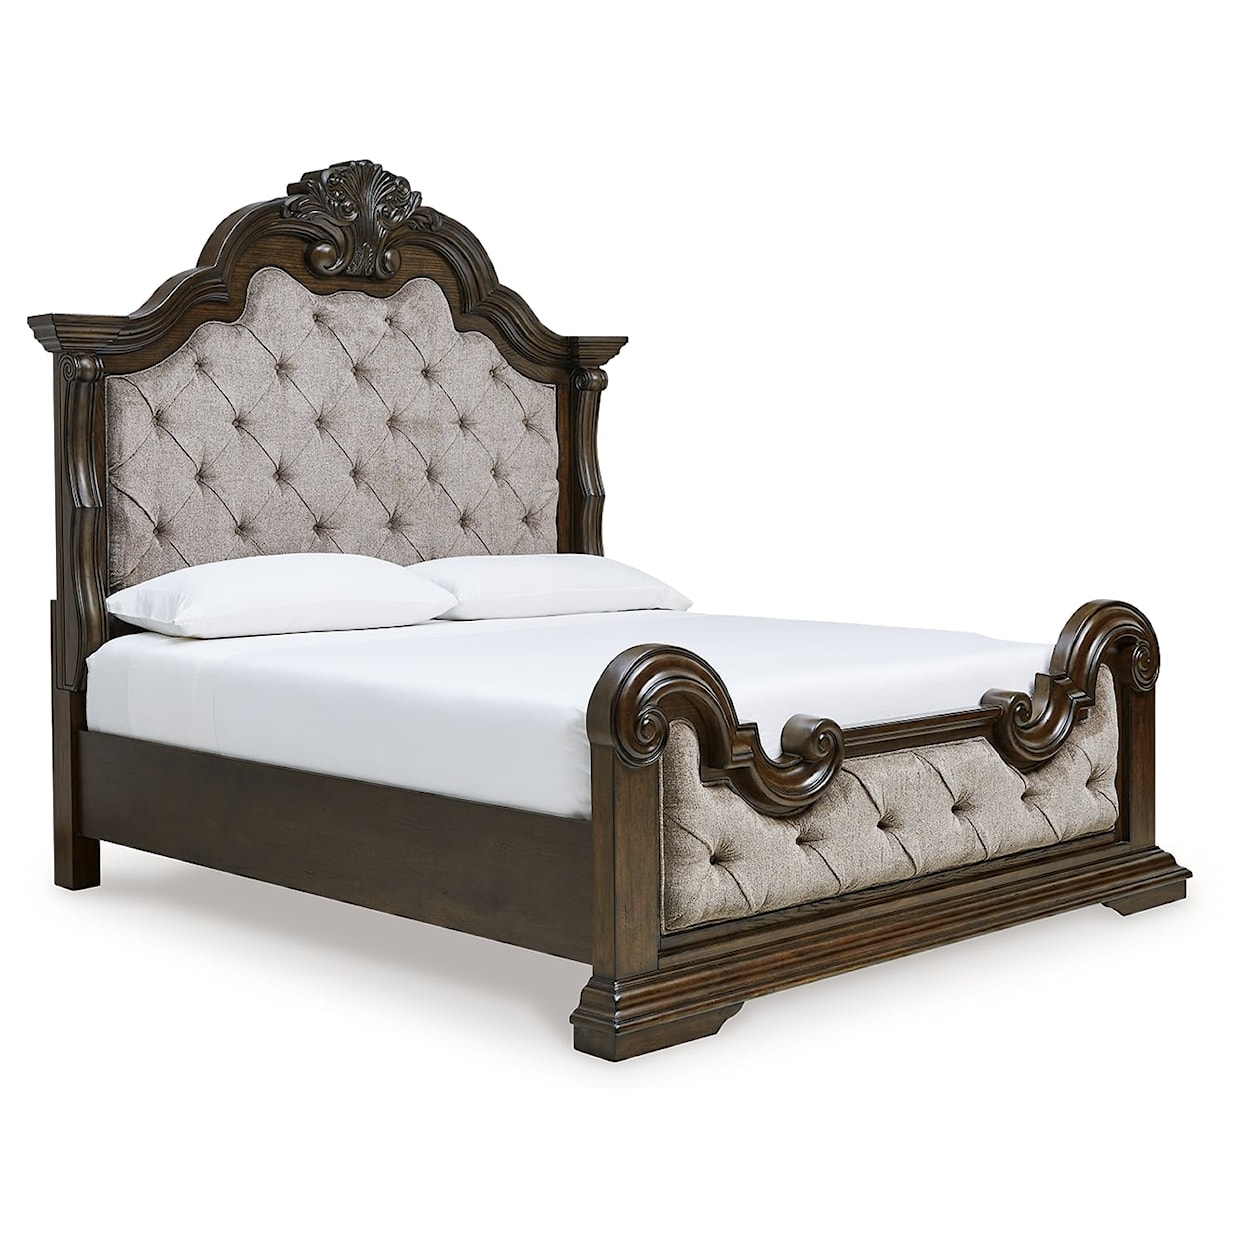 Benchcraft Maylee Queen Upholstered Bed